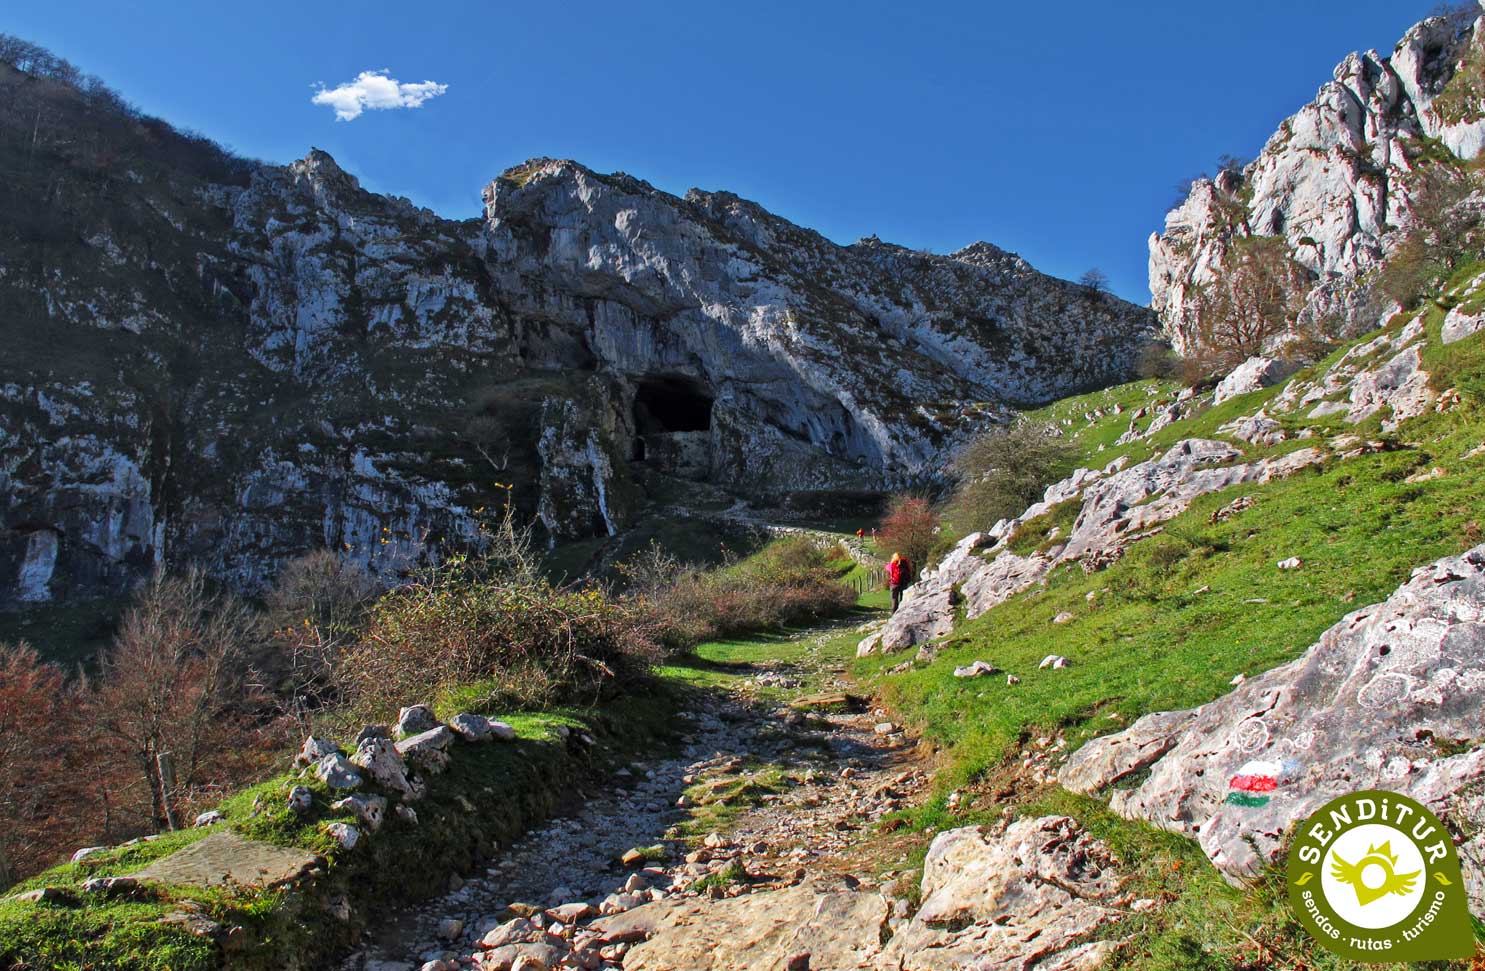 Bastones de Senderismo, Trekking o Montaña · Senditur sendas rutas y turismo